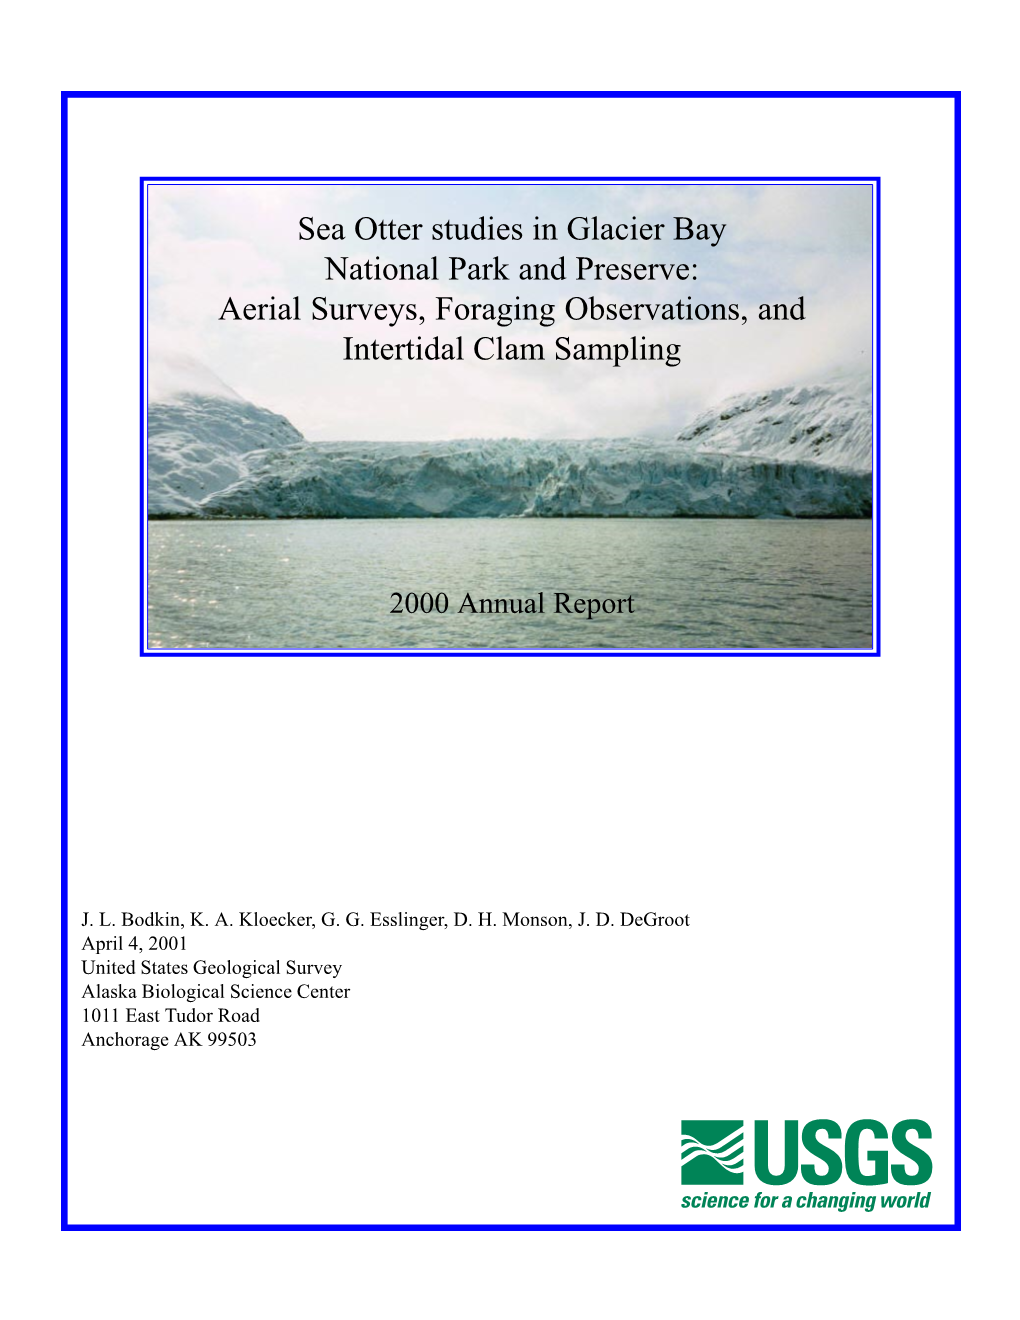 Sea Otter Studies in Glacier Bay National Park and Preserve: Aerial Surveys, Foraging Observations, and Intertidal Clam Sampling